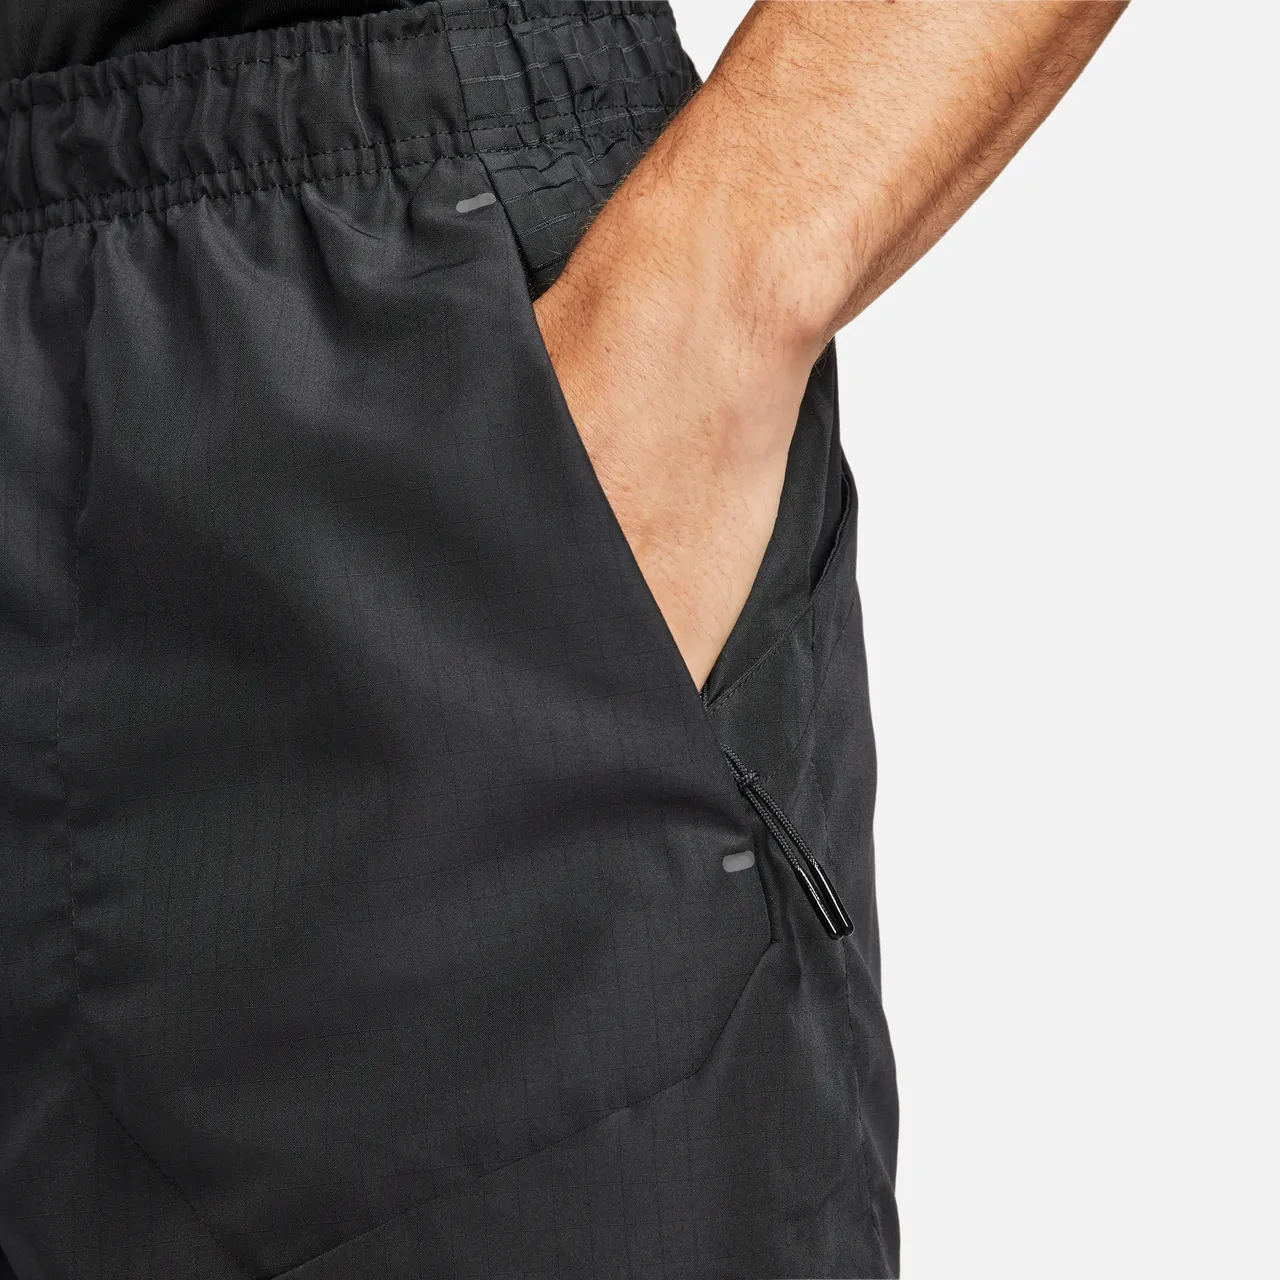 Nike Dri-FIT ADV APS Men's 15cm (approx.) Unlined Versatile Shorts - Black - Polyester